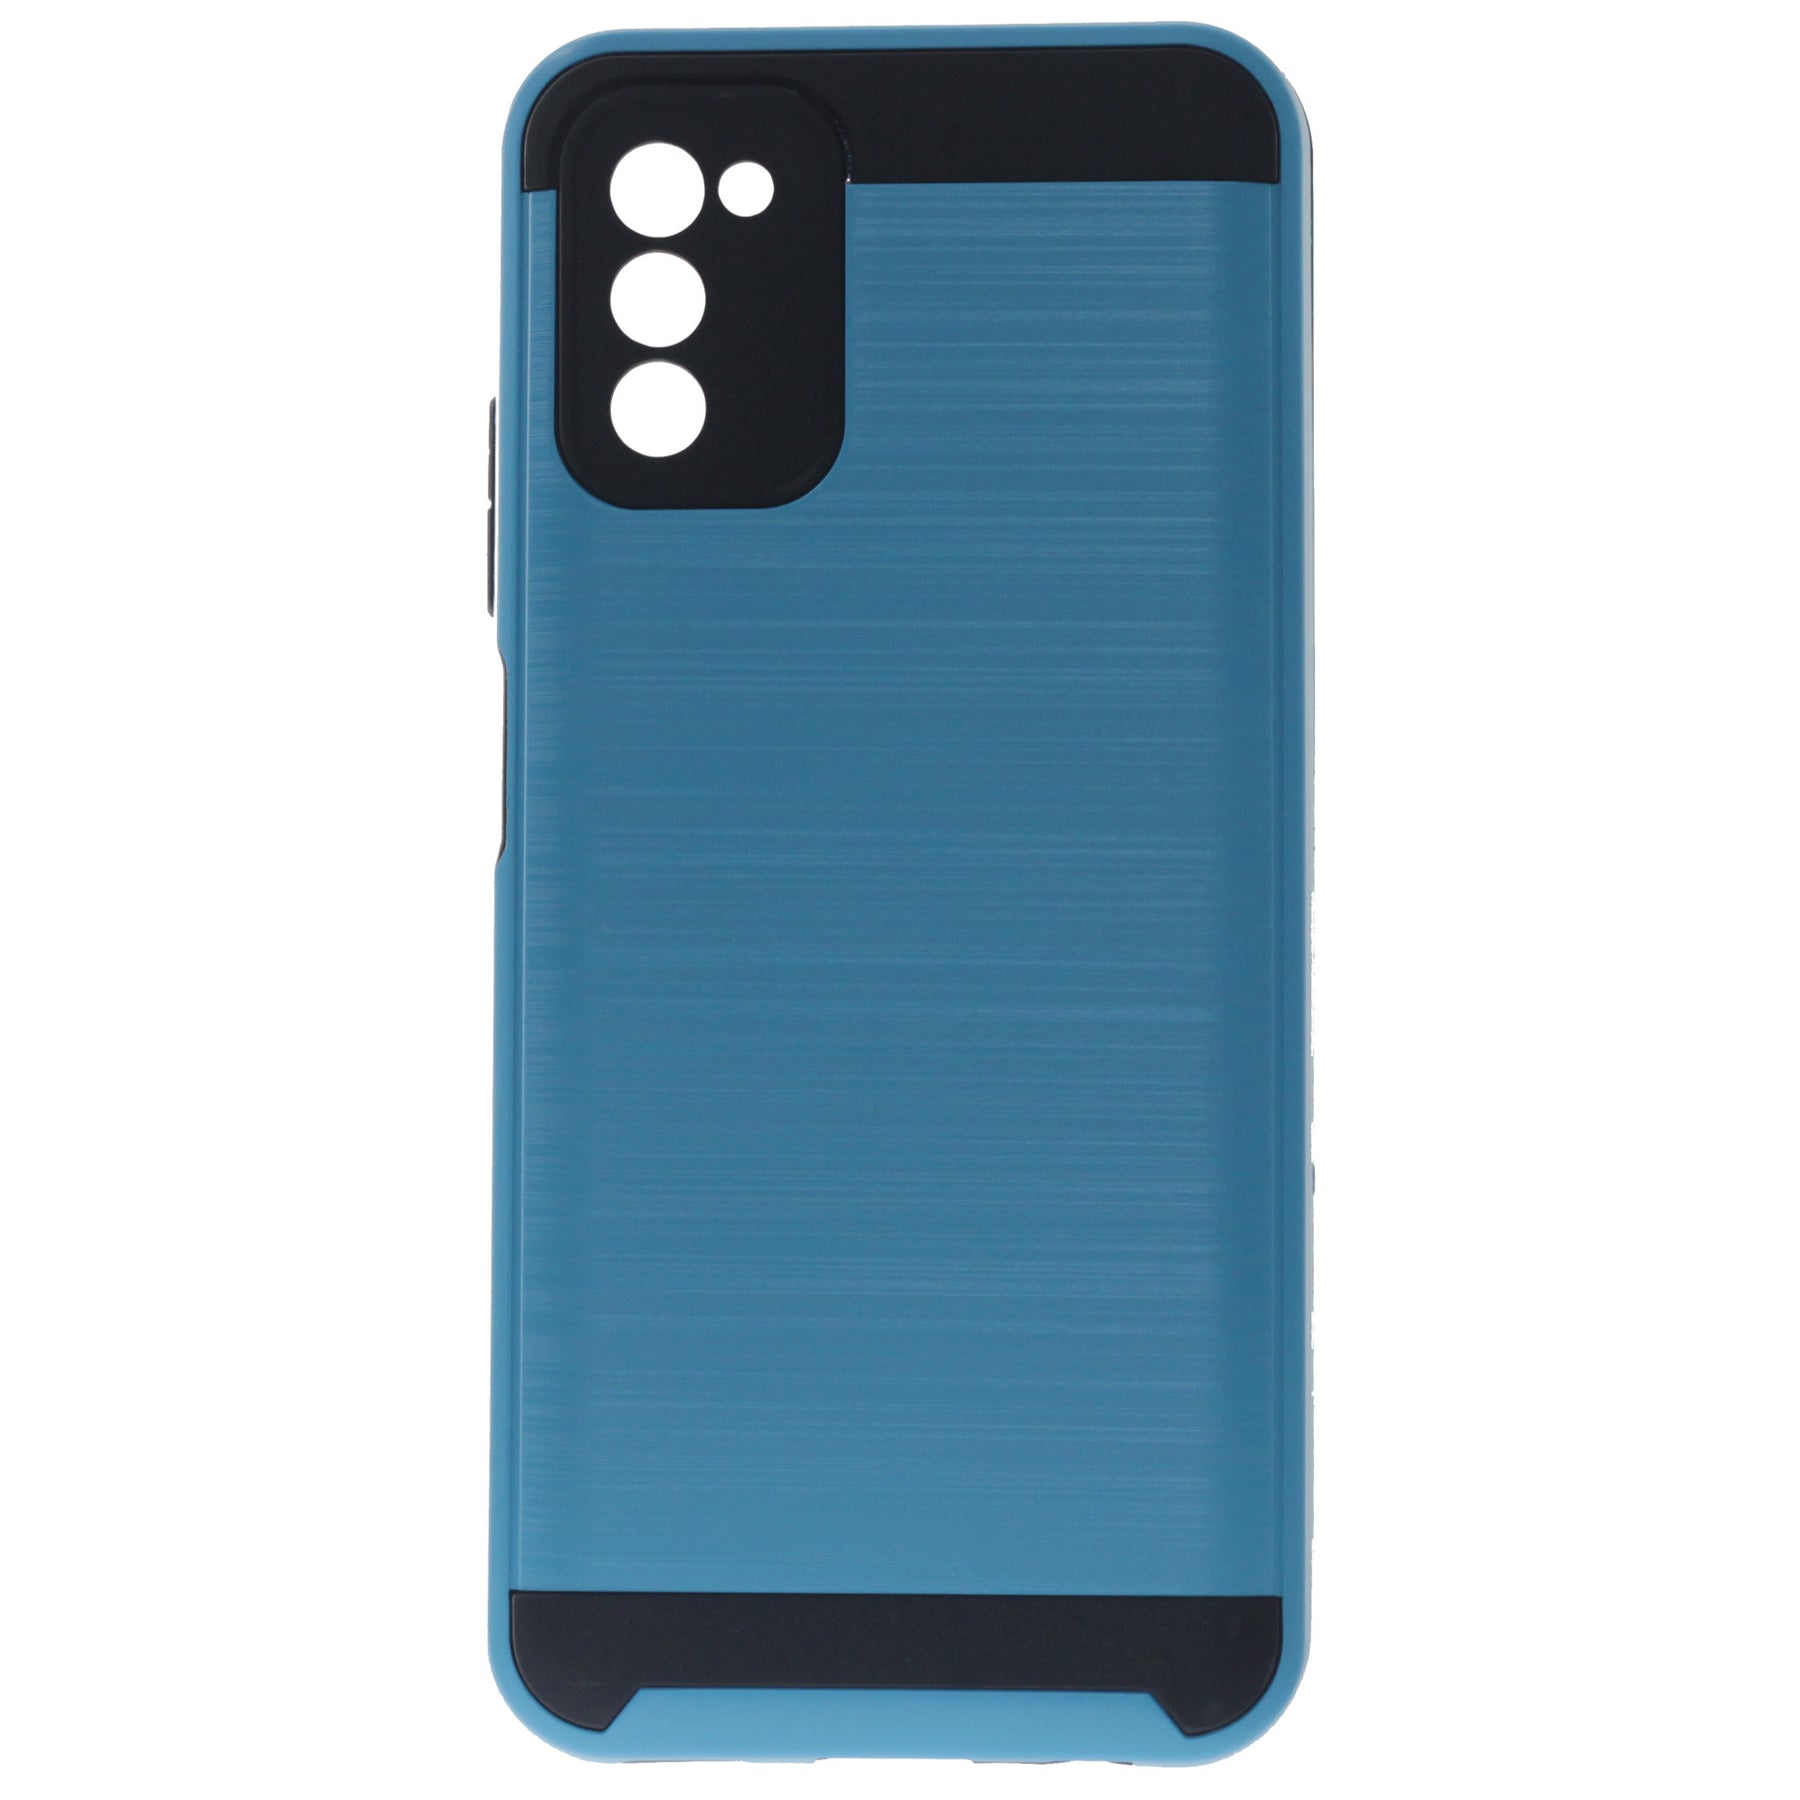 Samsung A02S blue case